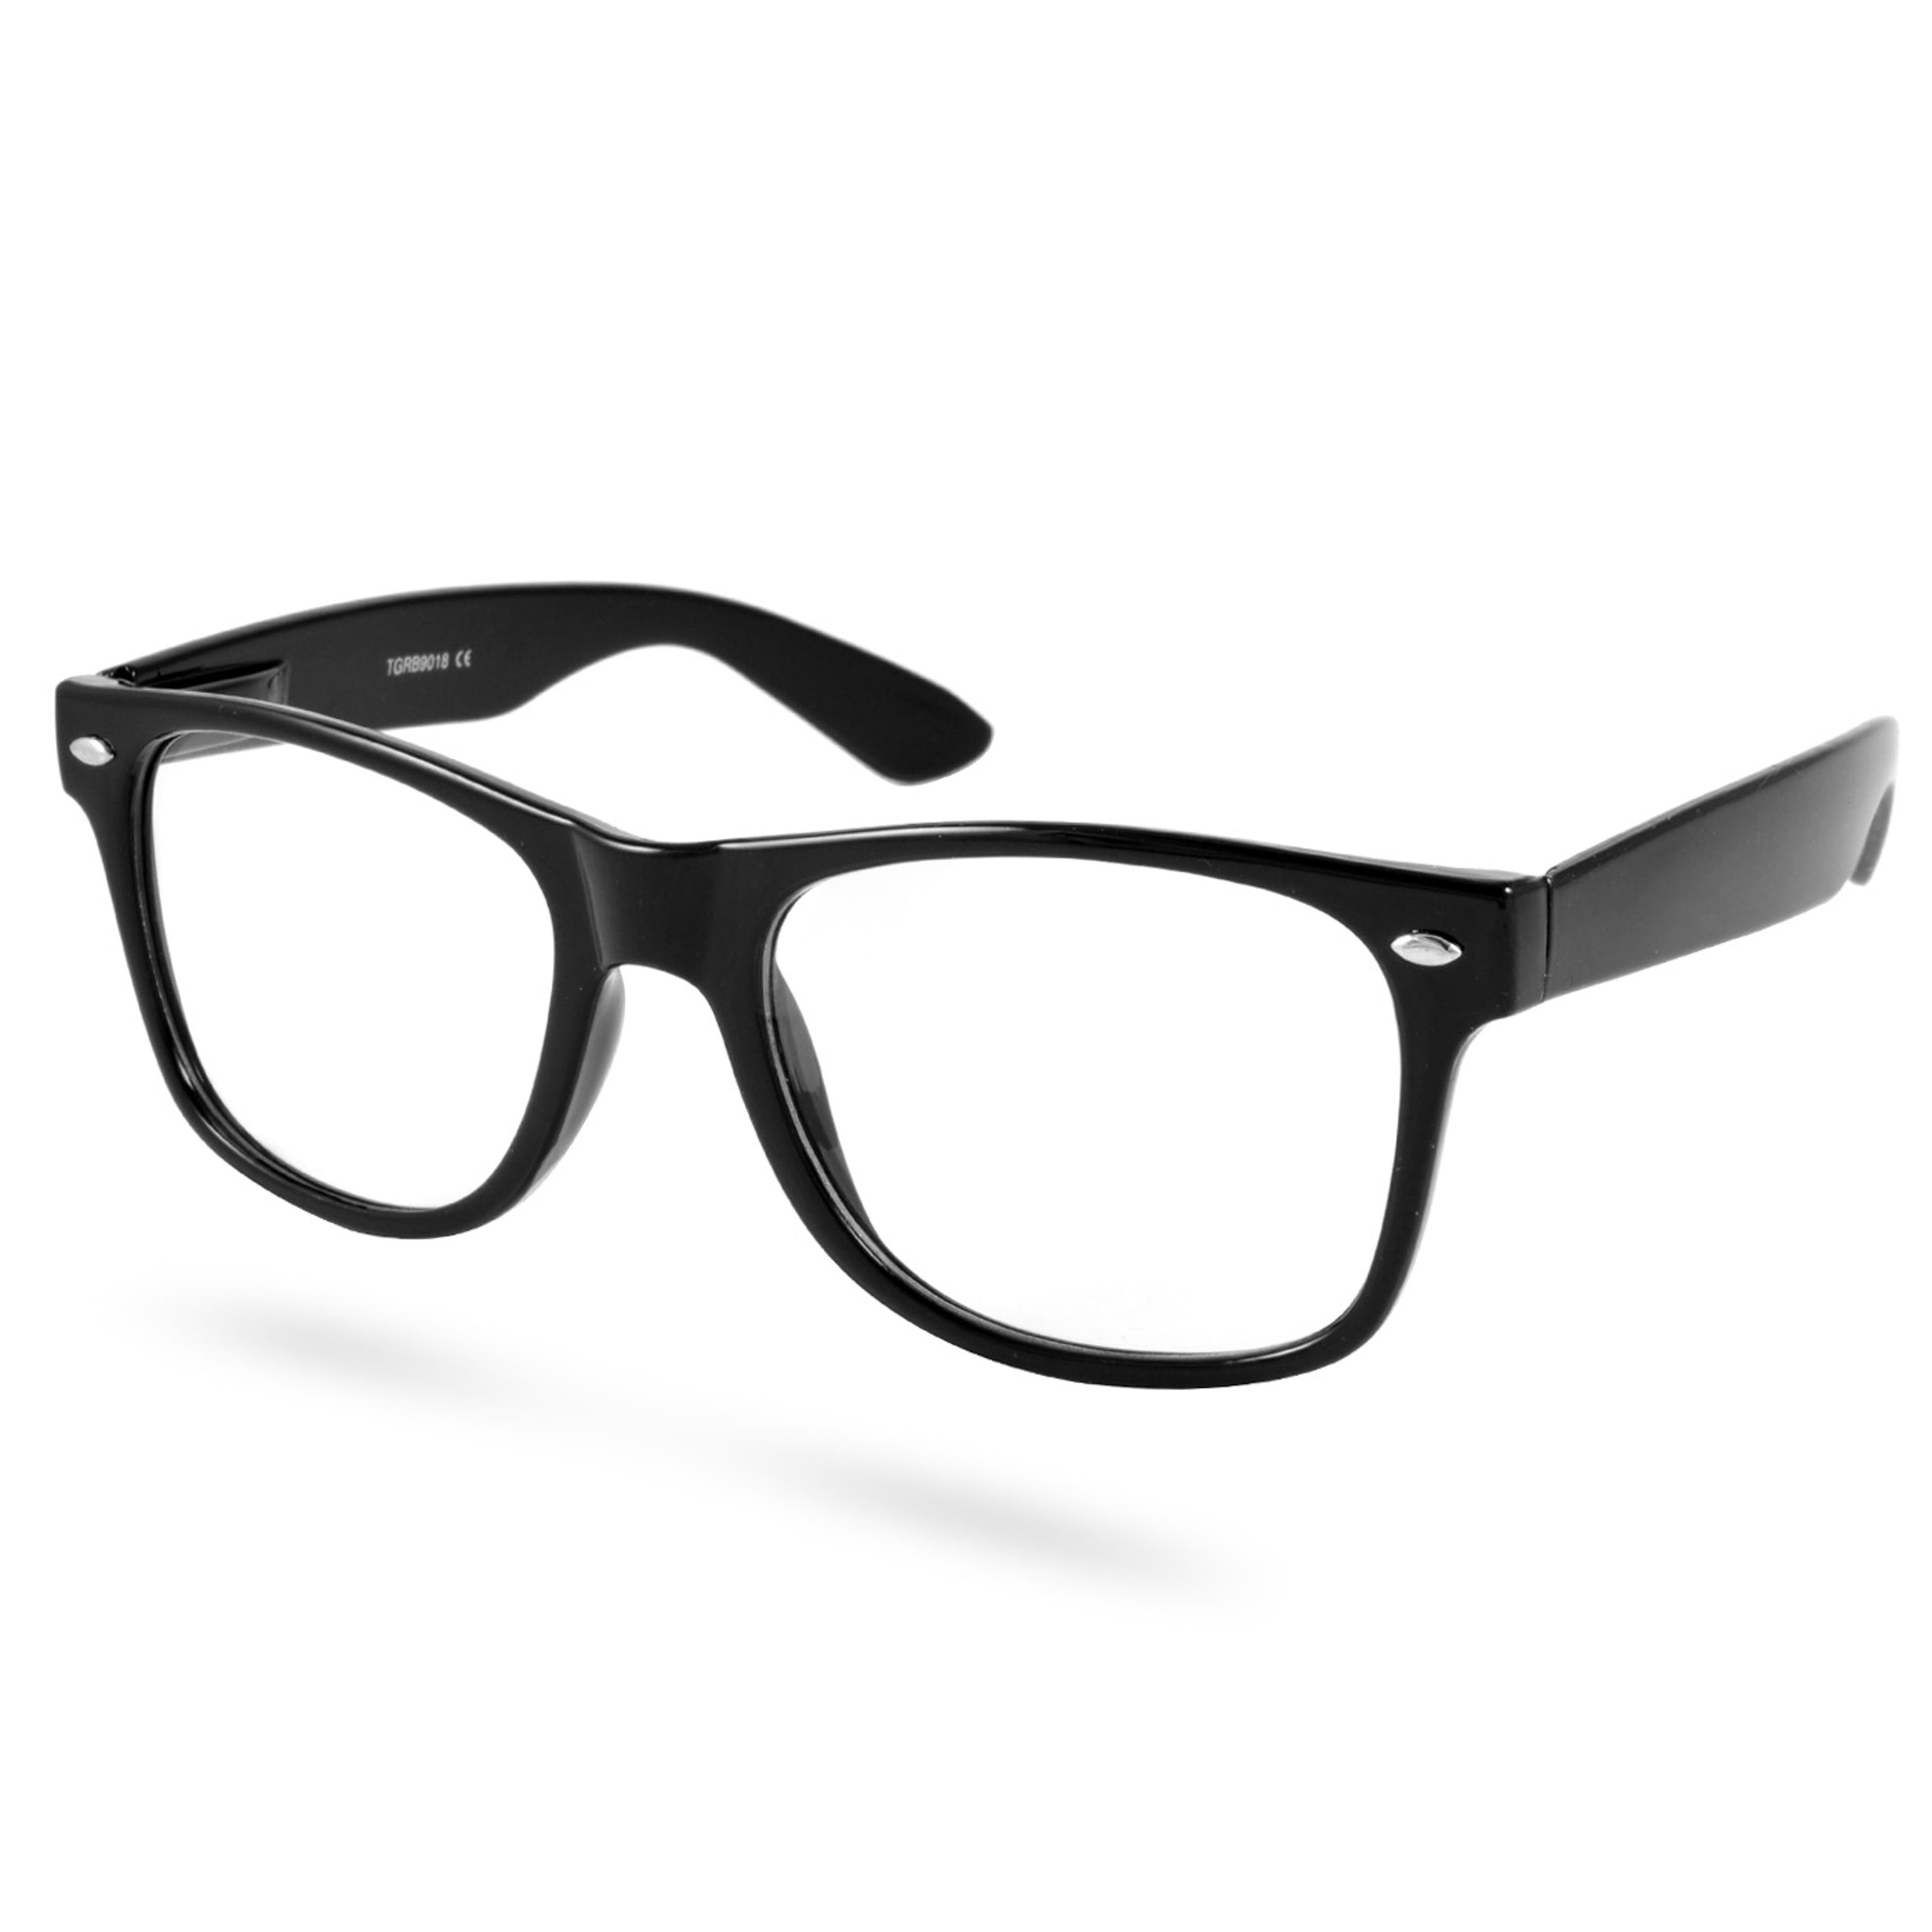 Retro Black Clear Lens Glasses